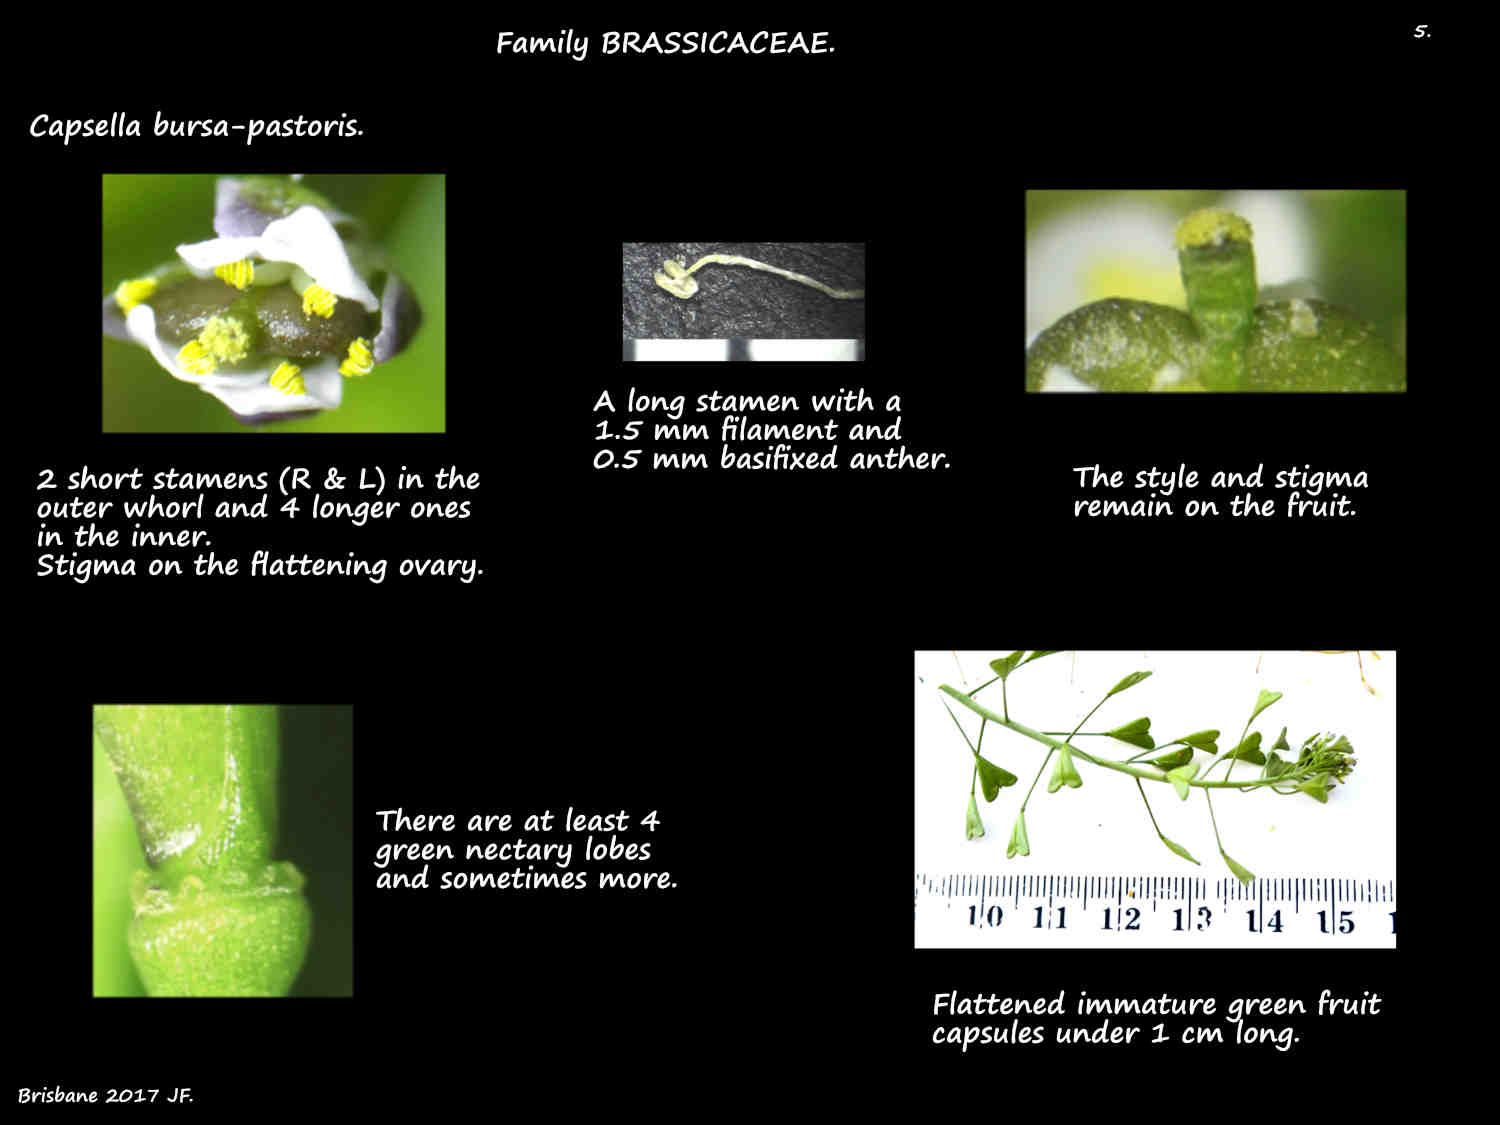 5 Capsella bursa-pastoris stamens & nectaries